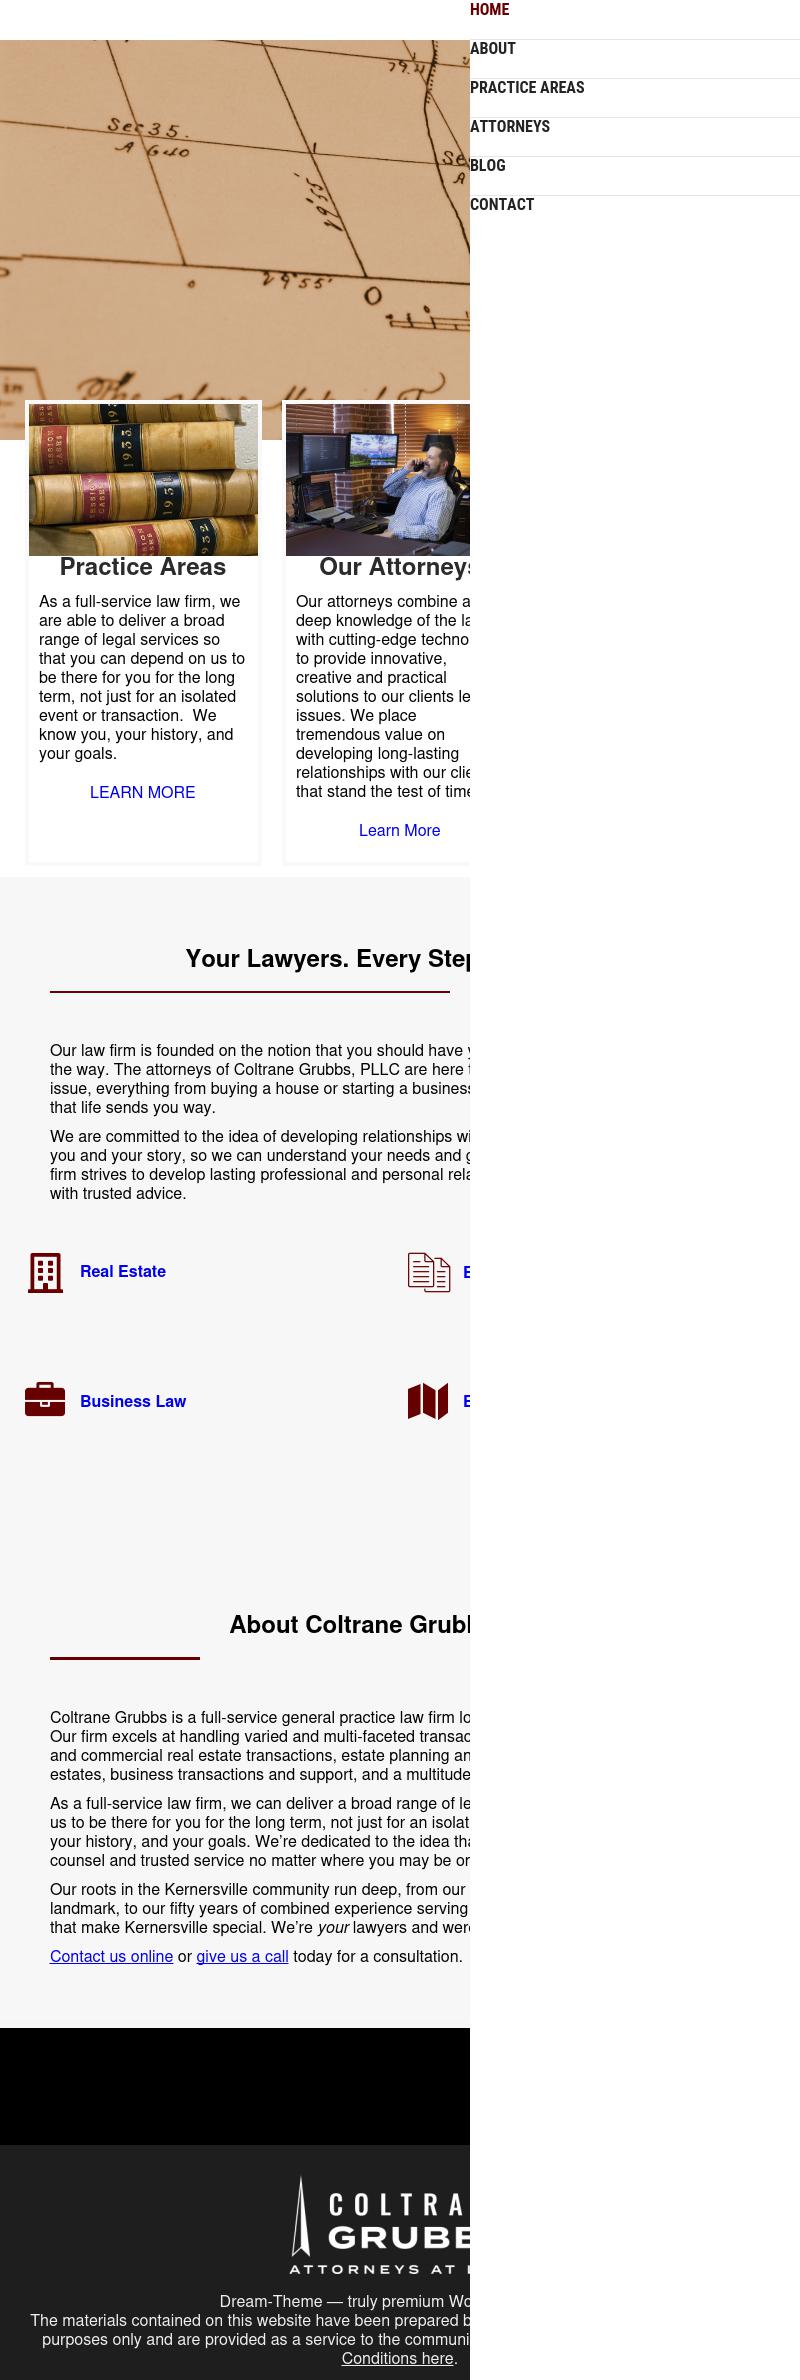 Coltrane Grubbs & Whatley - Kernersville NC Lawyers